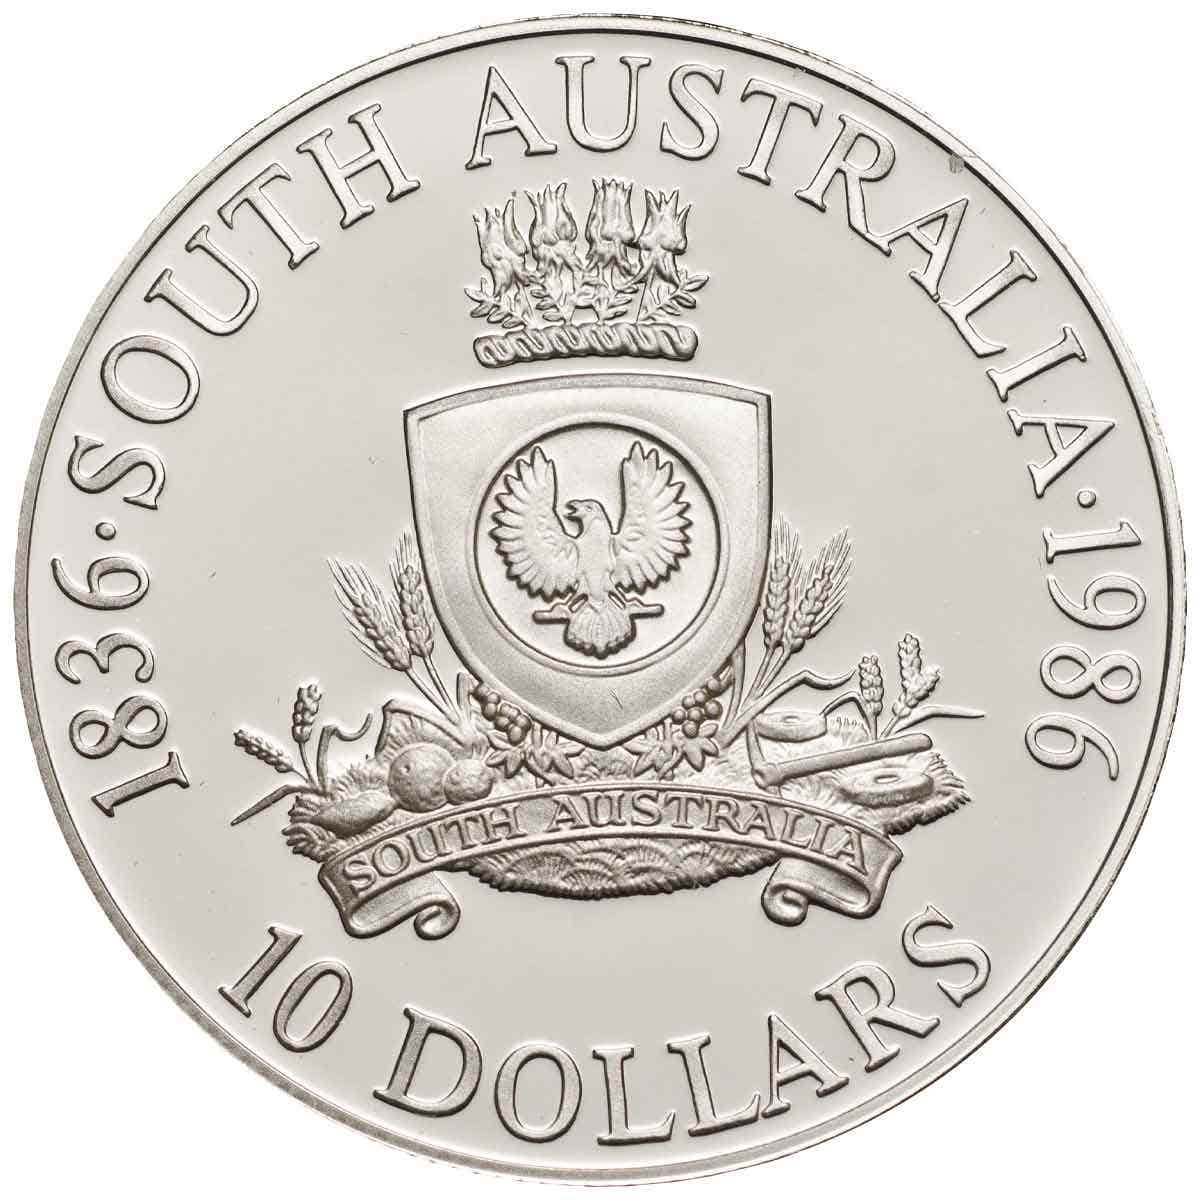 Australia South Australia 1986 $10 Silver Proof Coin